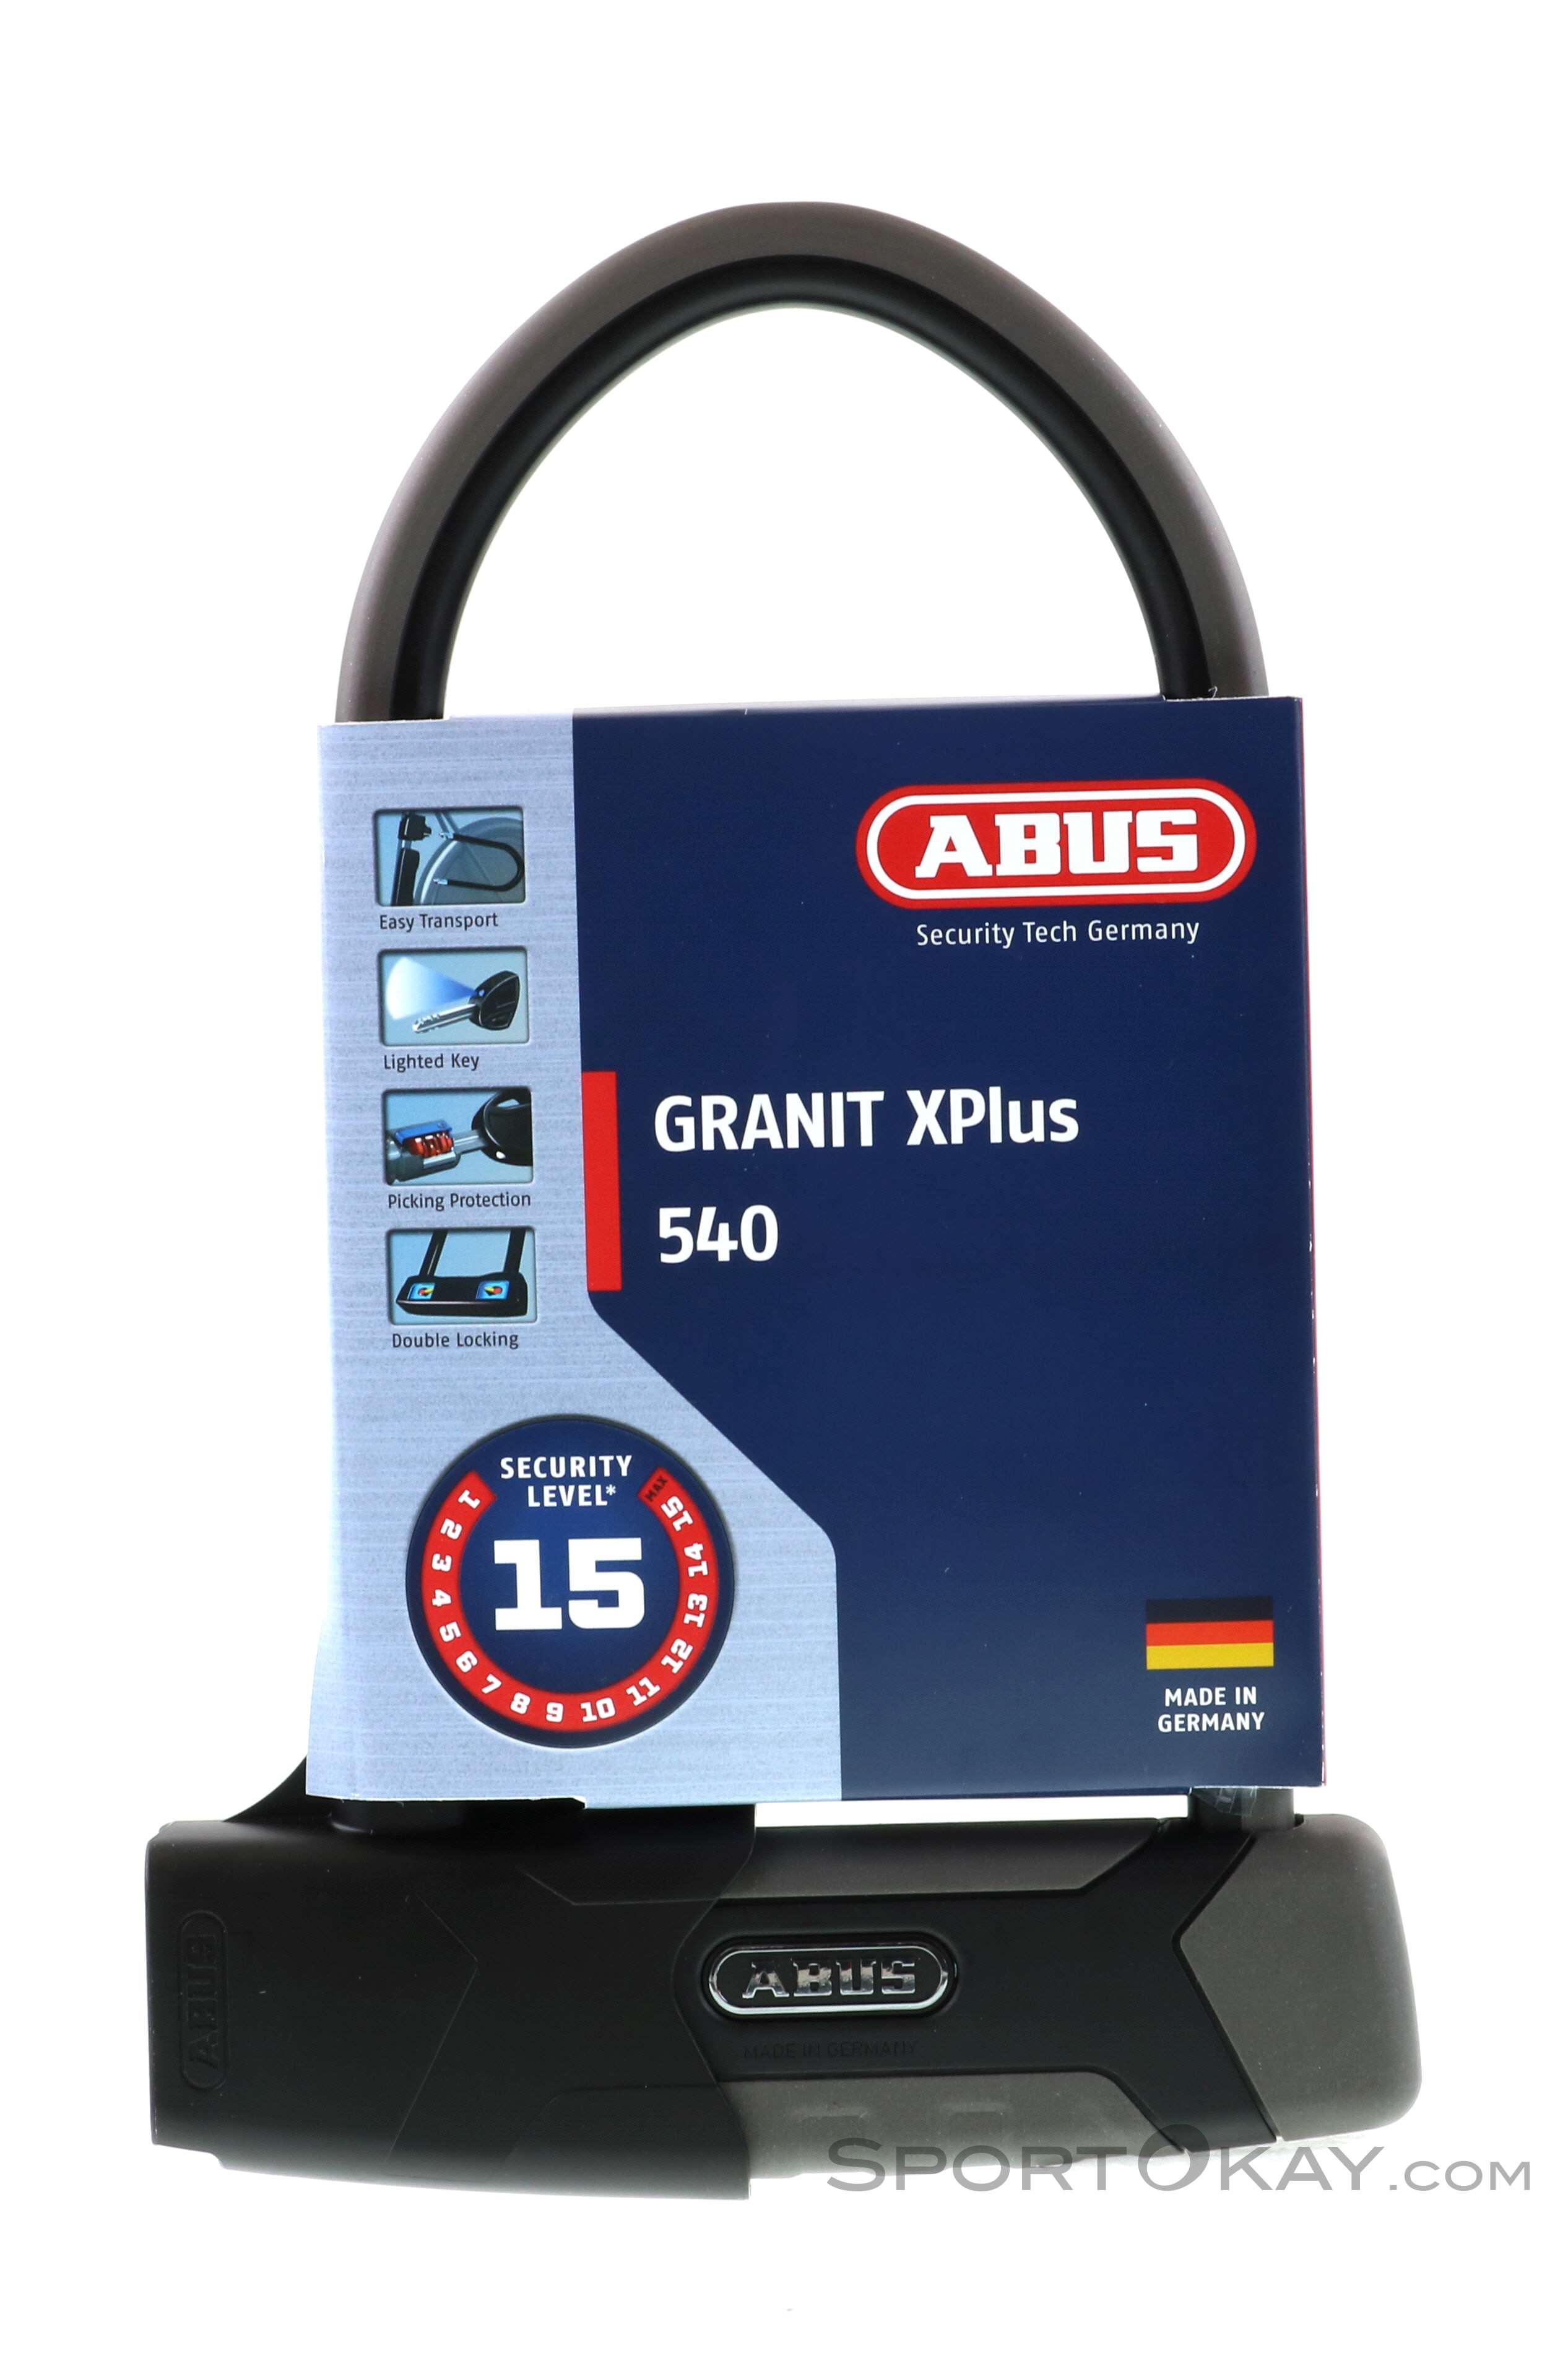 Abus Granit Xplus 540 Ush Halterung Bike Lock Bike Lock Accessory Bike All